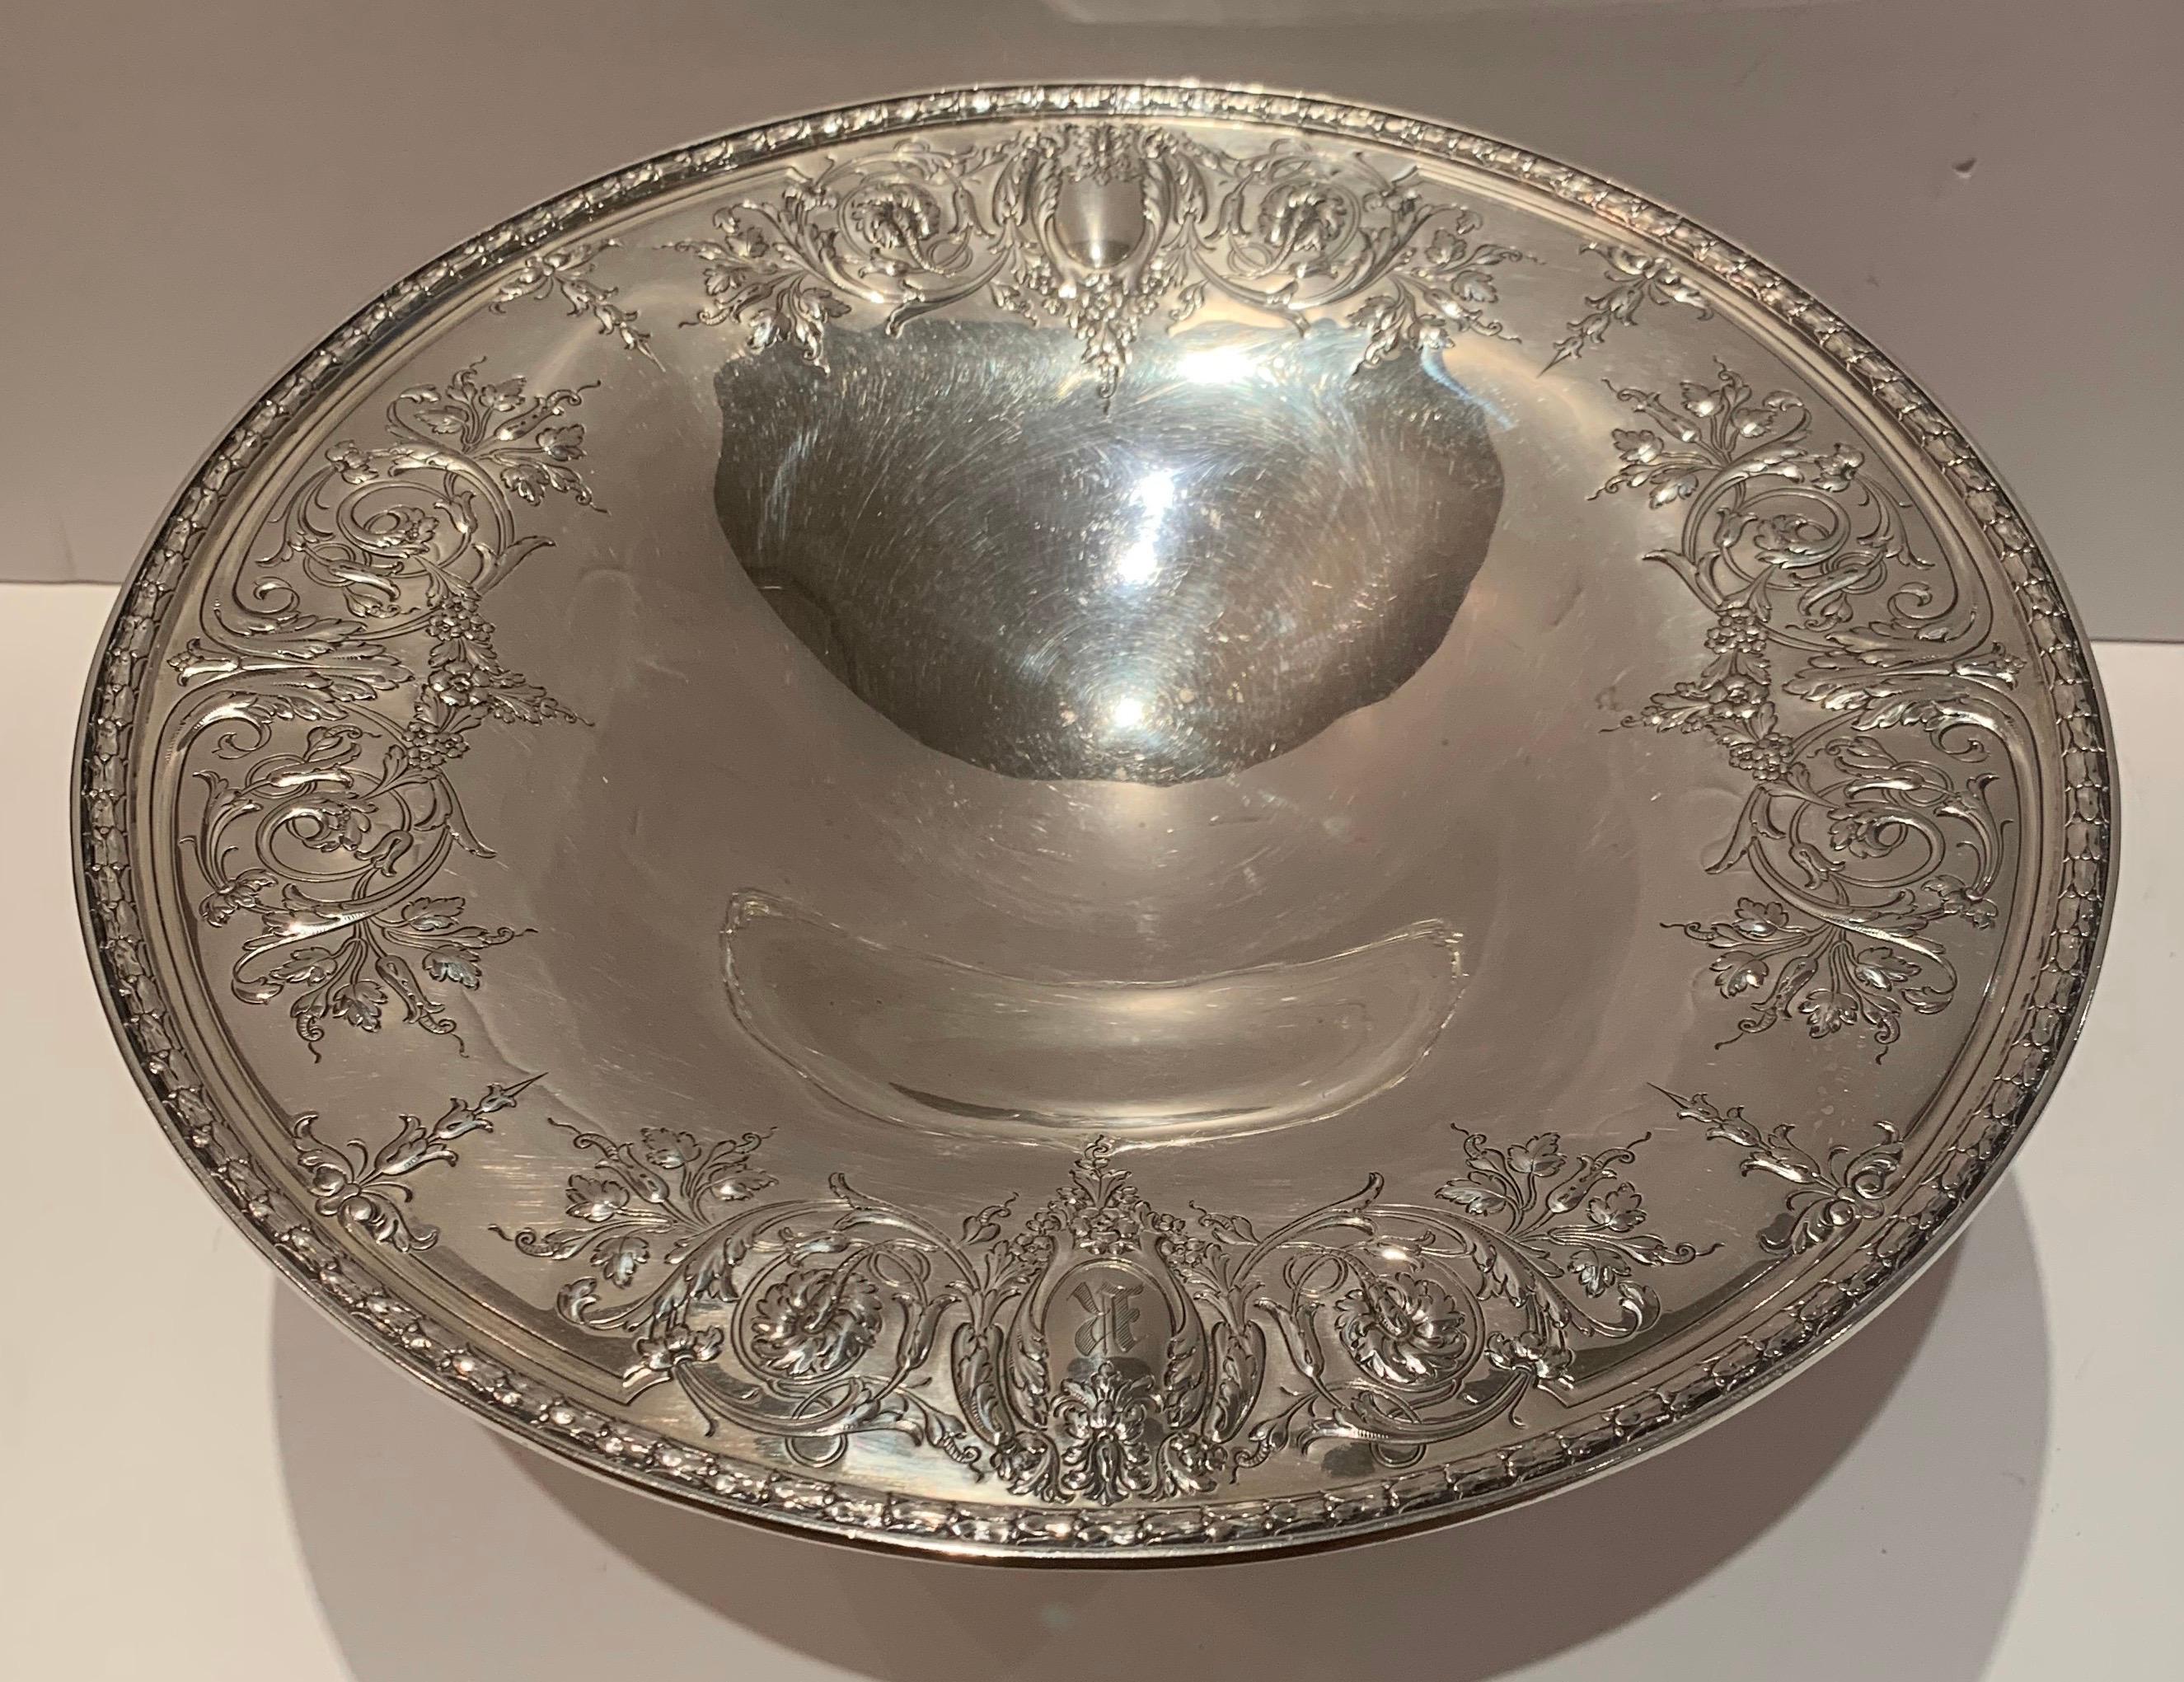 A wonderful international sterling silver round regency centerpiece bowl on stand.